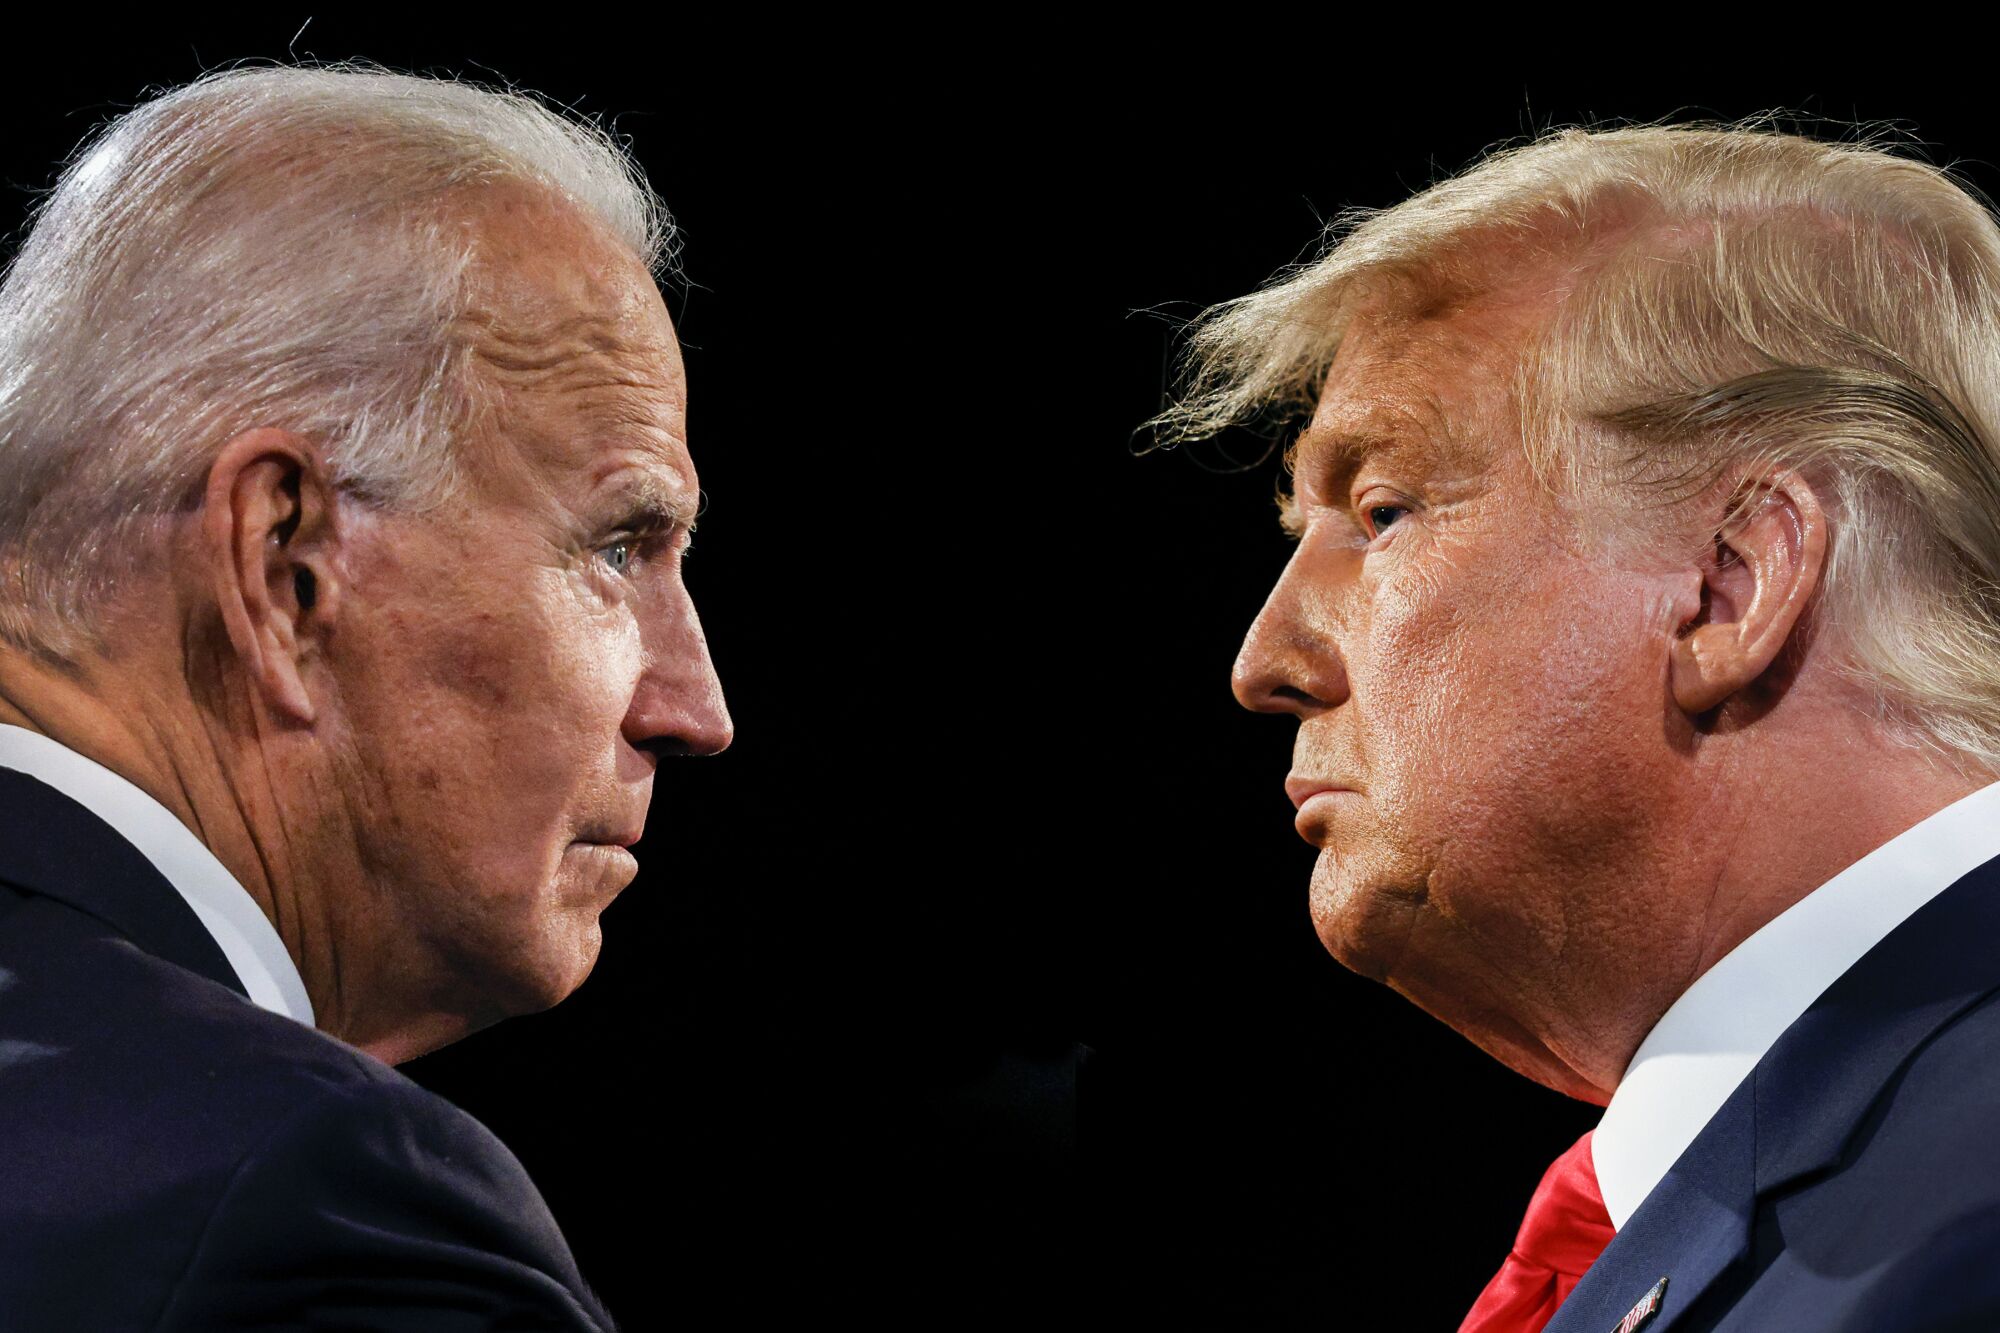 President Trump and Joe Biden